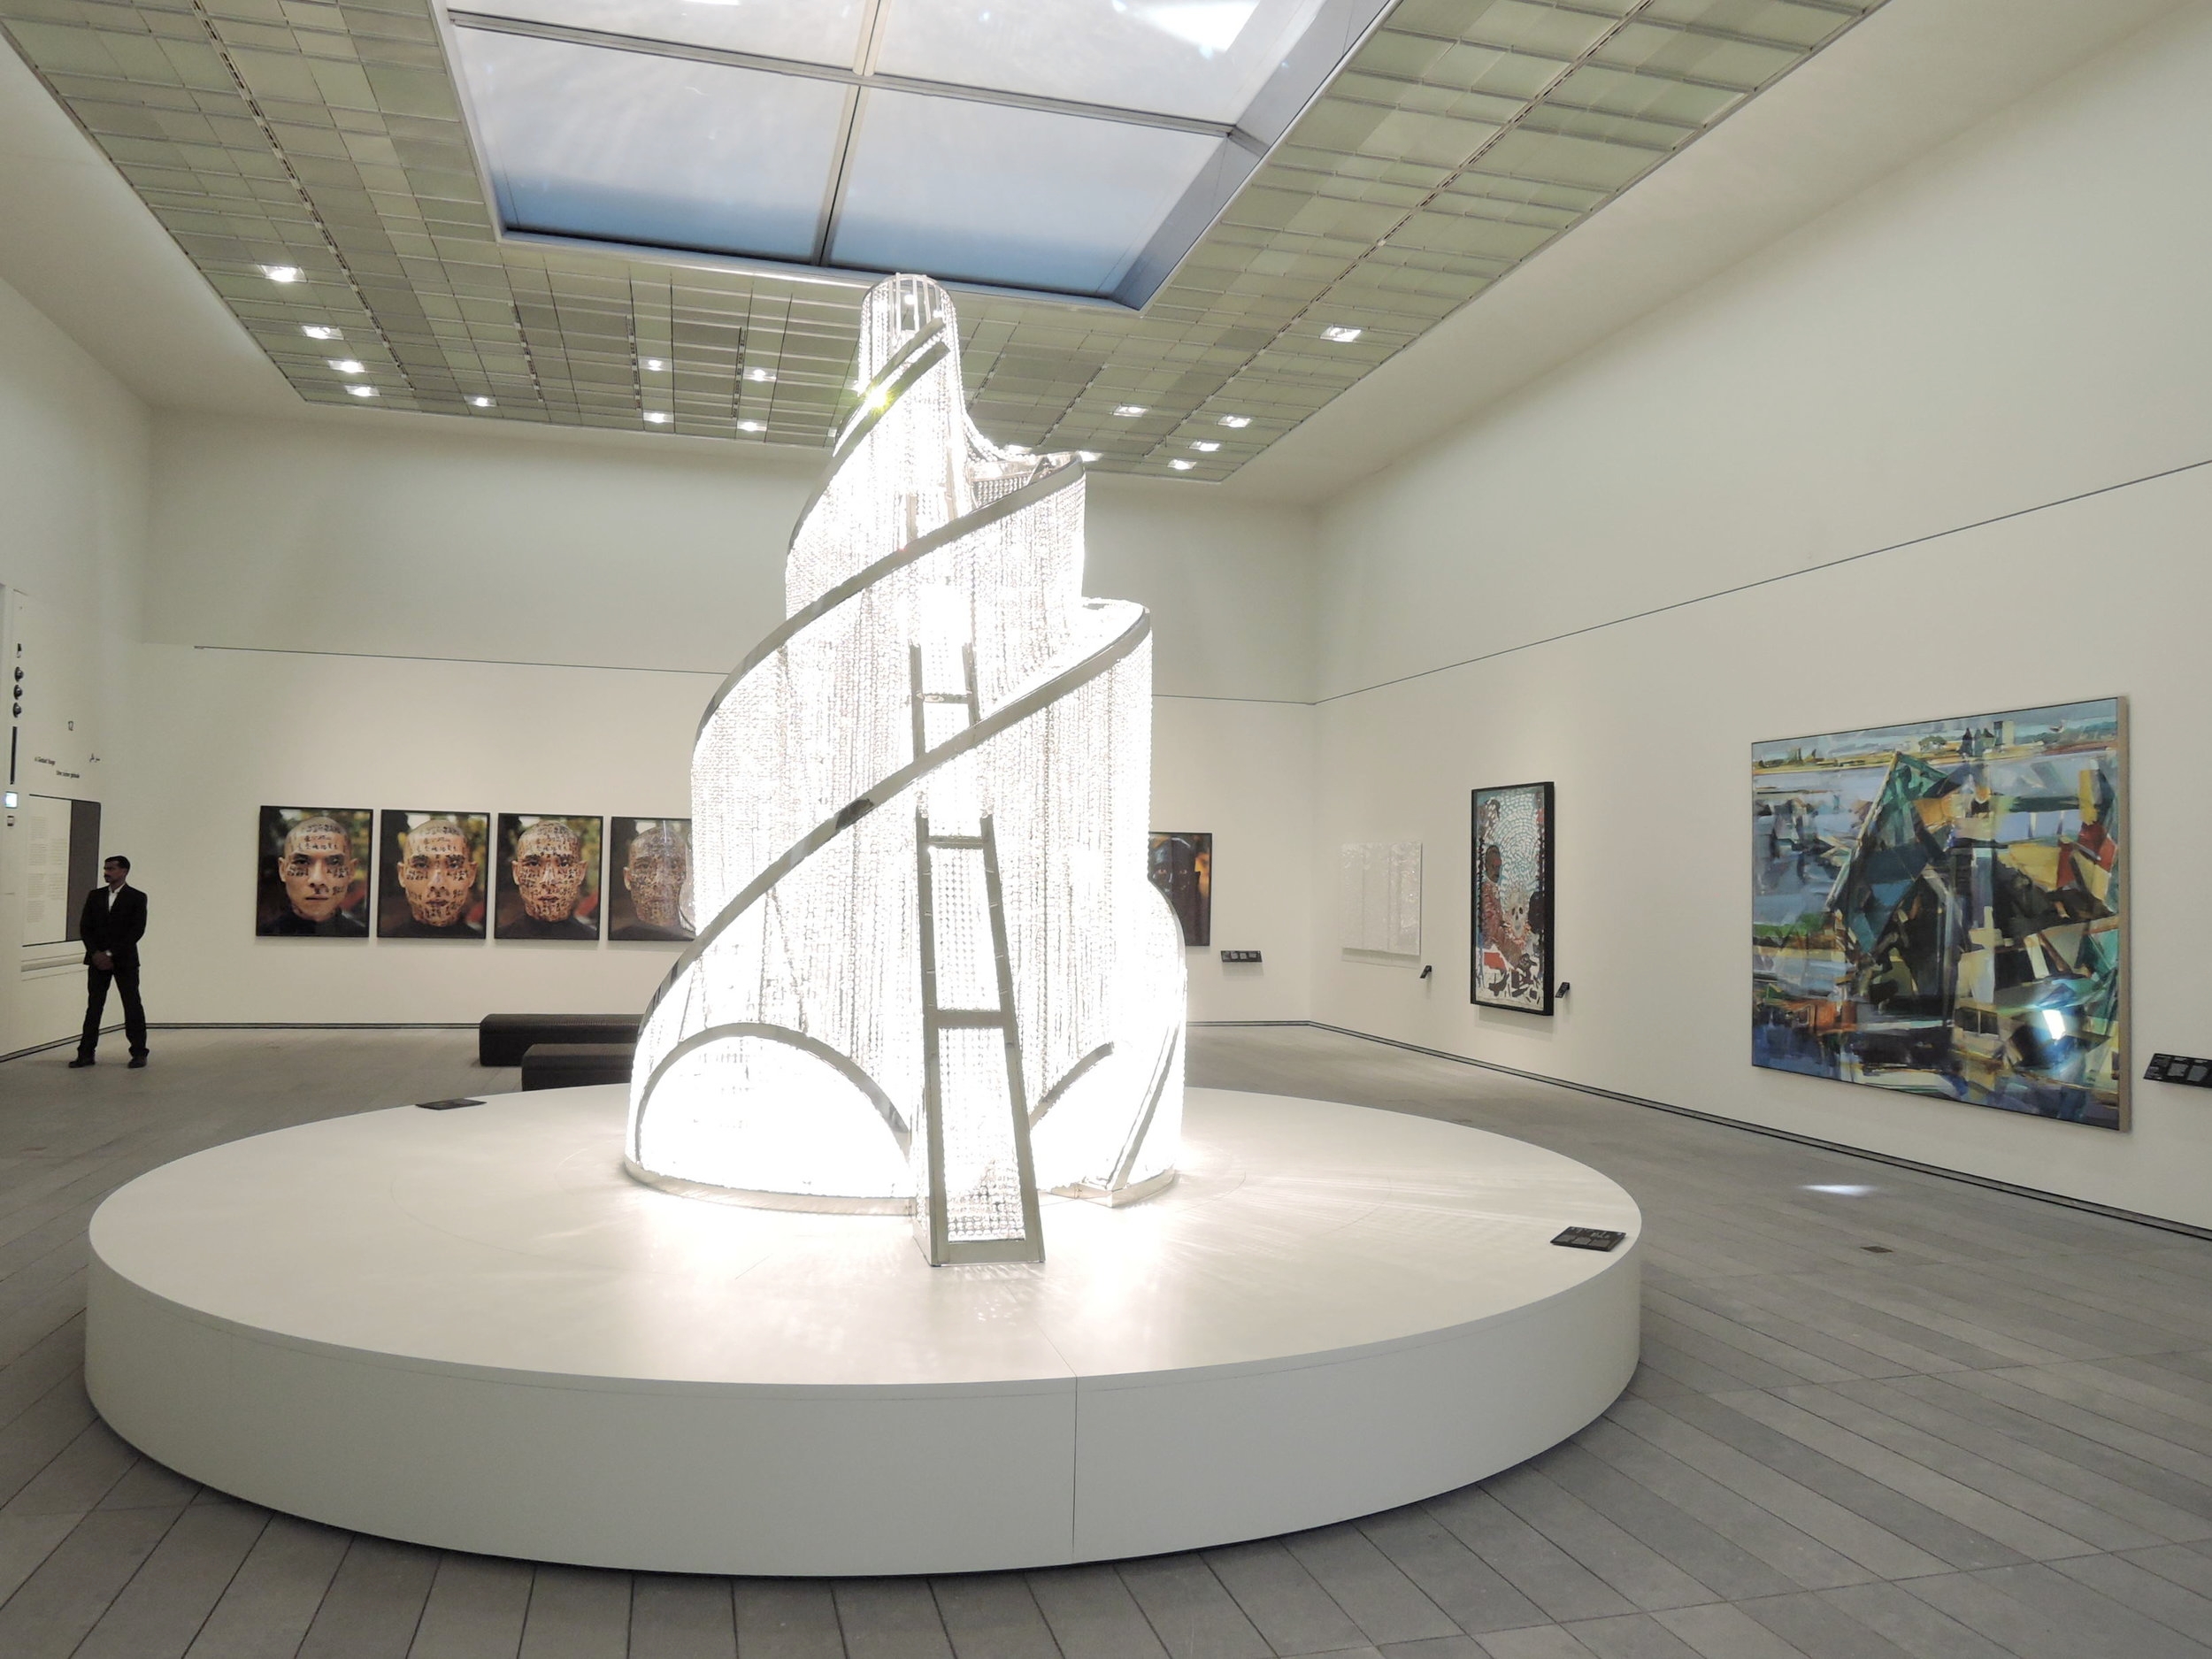    Une scène globale  , Louvre Abu Dhabi, November 2017, curator Juliette Singer. Artists in view Zang Huan, Mounir Fatmi, Omar Ba, Duncan Wylie, Ai Wei Wei 